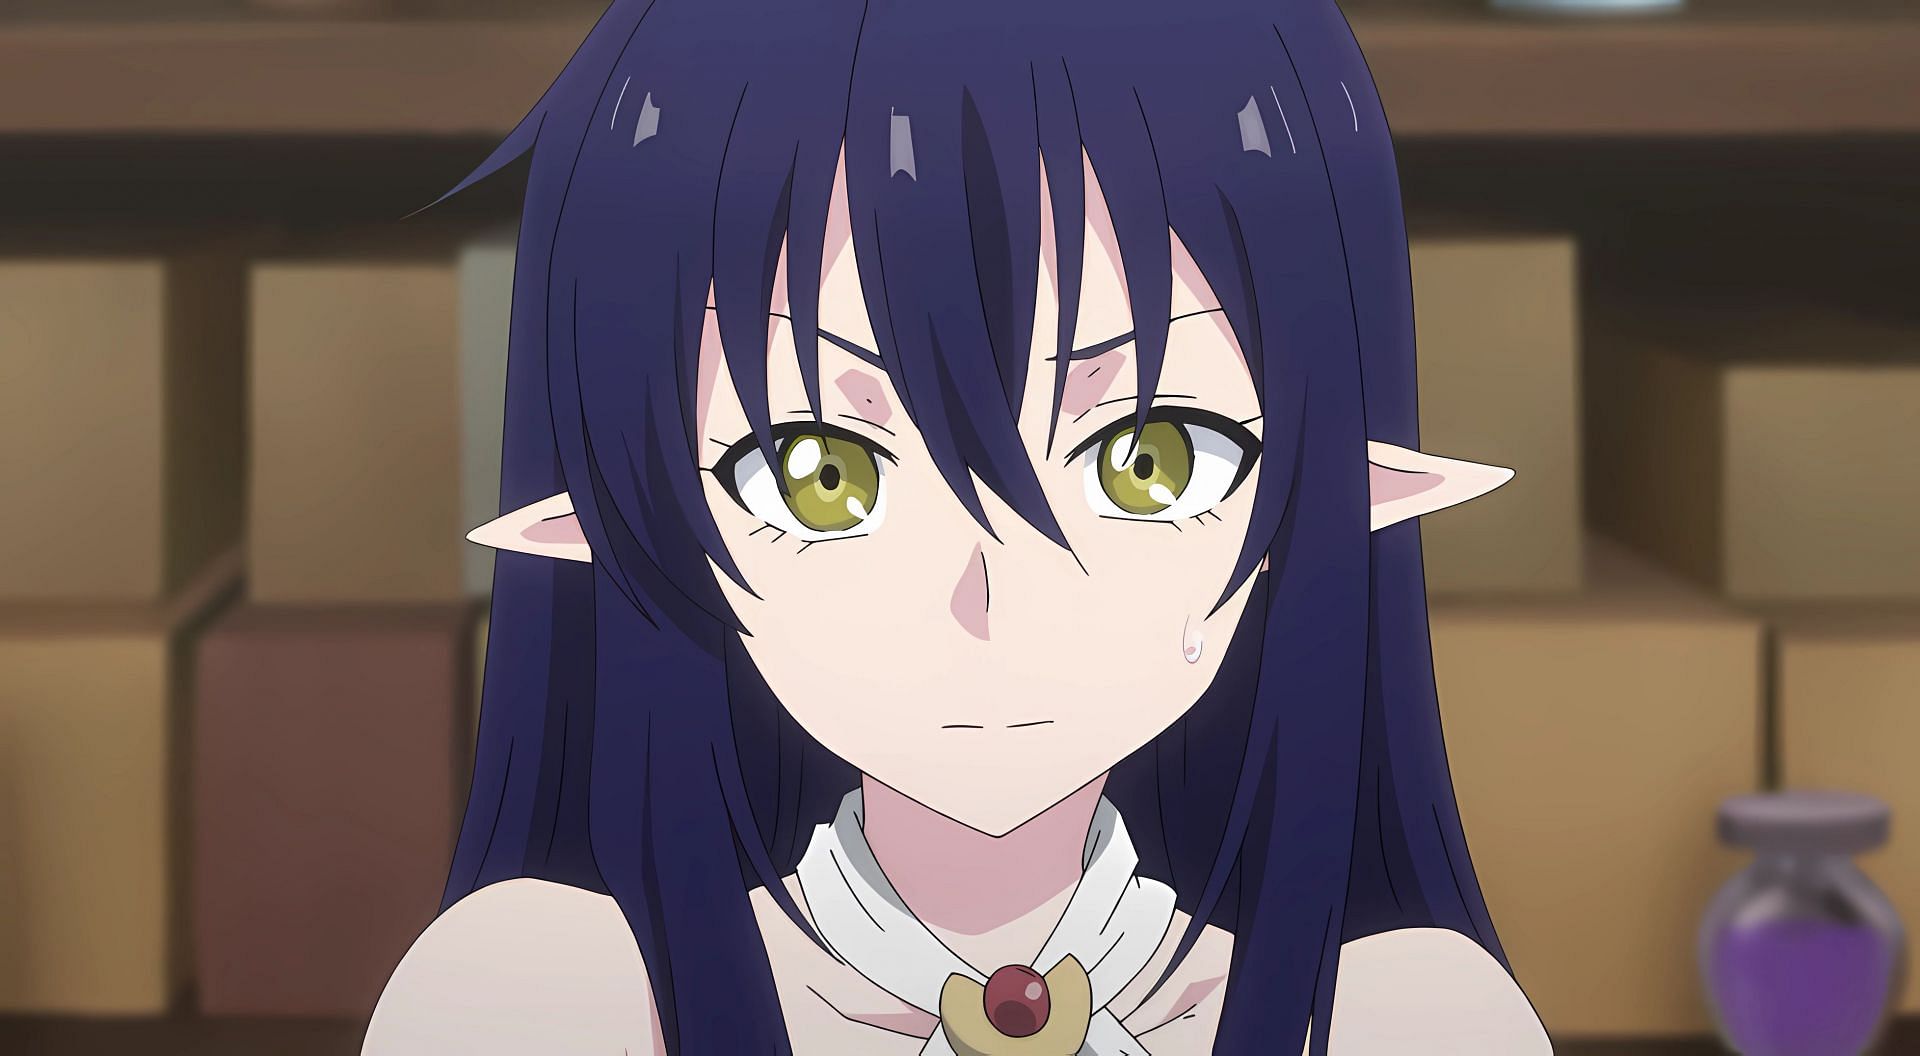 Tiera as seen in the anime (Image via Yokohama Animation Lab &amp; Cloud Hearts)